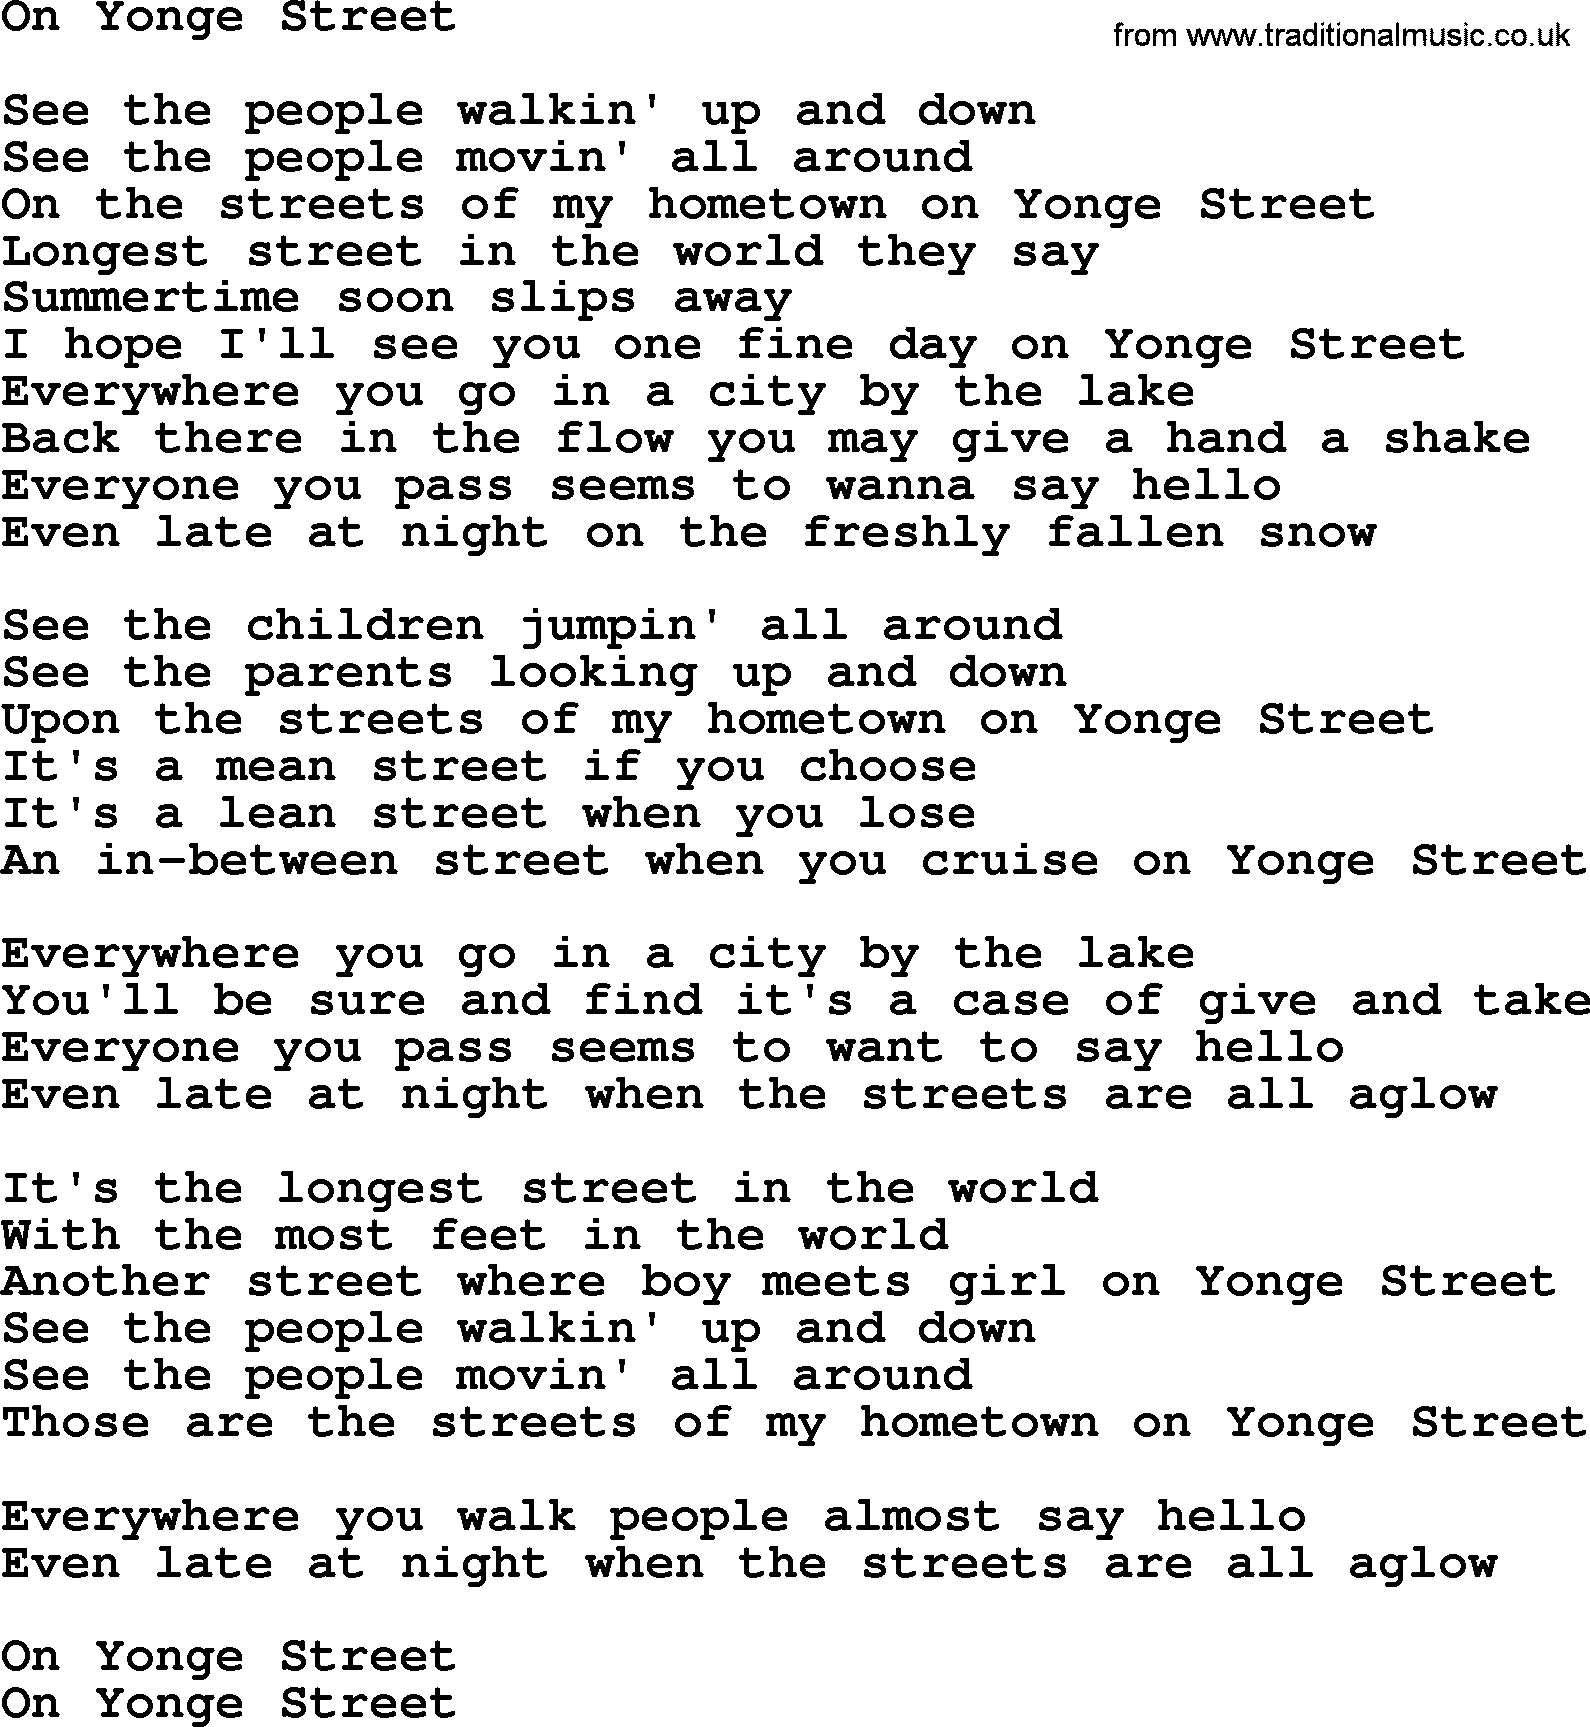 Gordon Lightfoot song On Yonge Street, lyrics